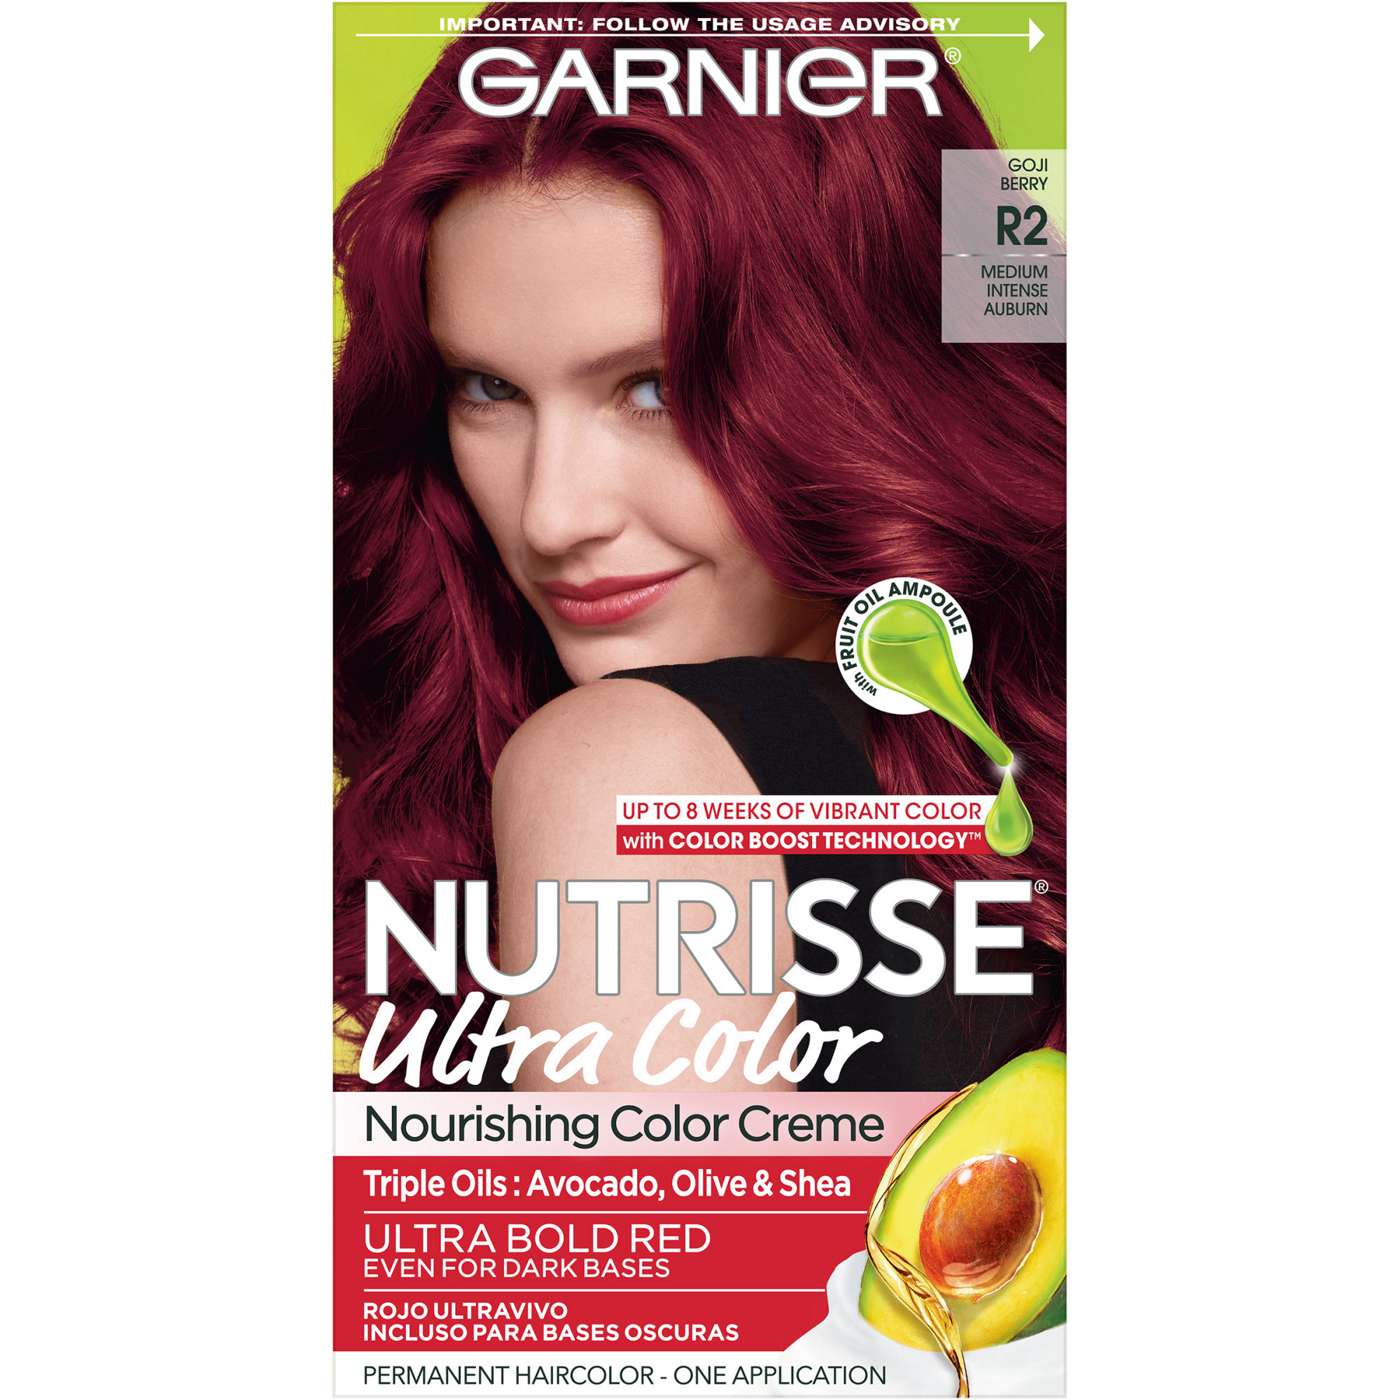 Garnier Nutrisse Ultra Color Nourishing Bold Permanent Hair Color Creme R2 Medium Intense Auburn; image 1 of 8